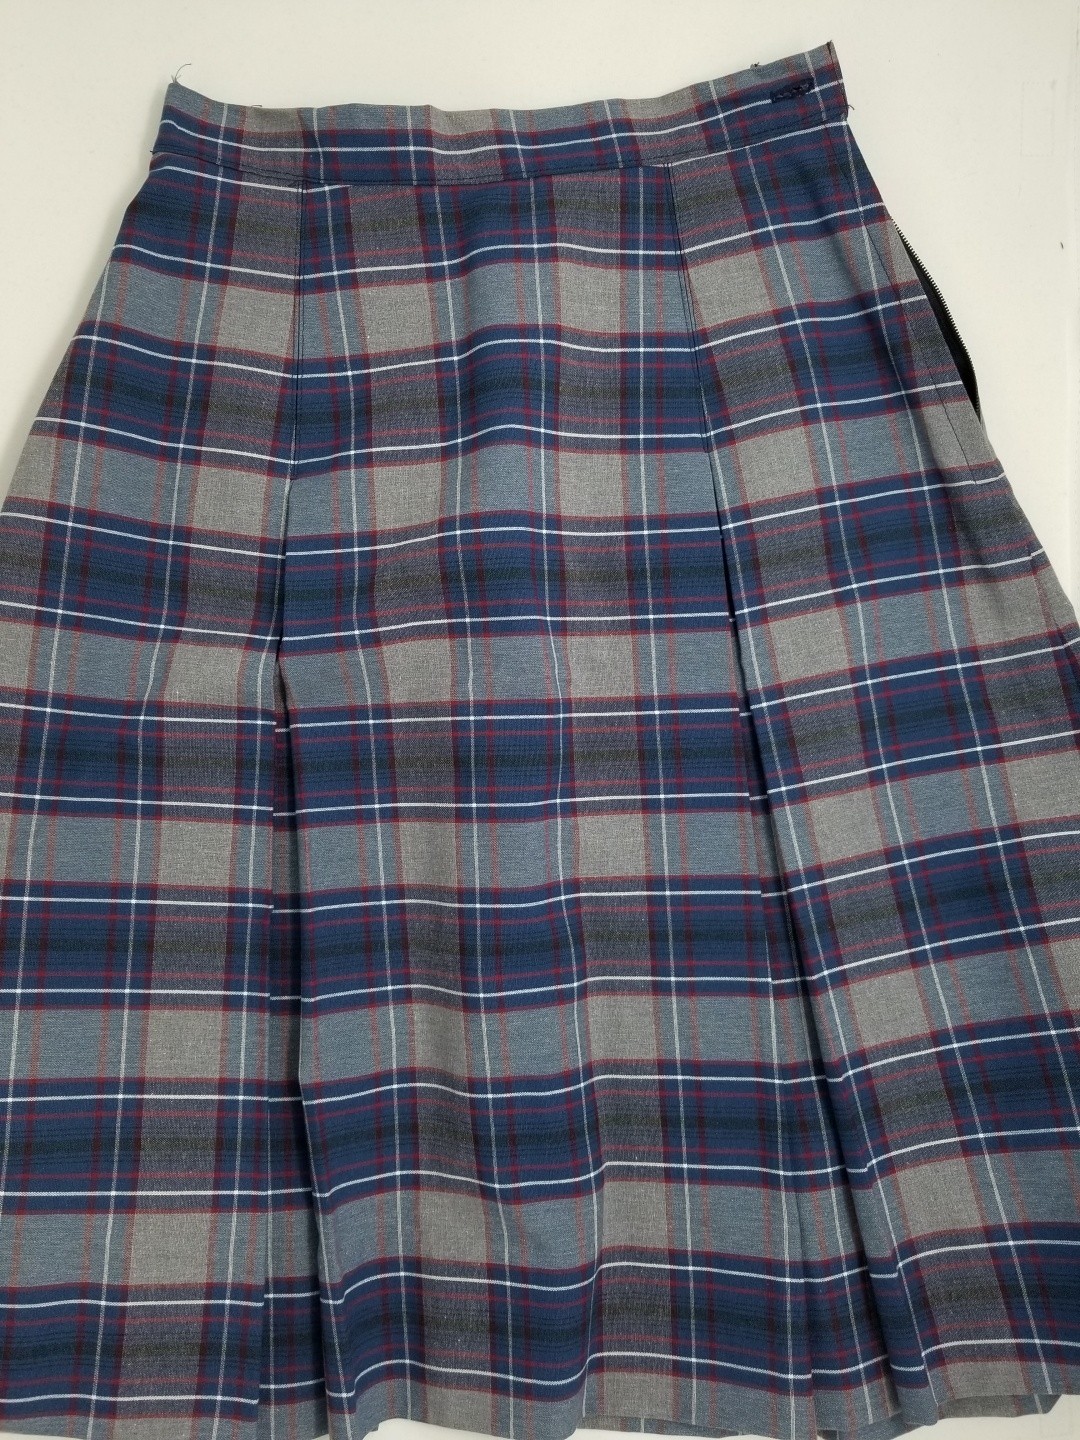 Box Pleat Skirt- Style 48-Plaid 20